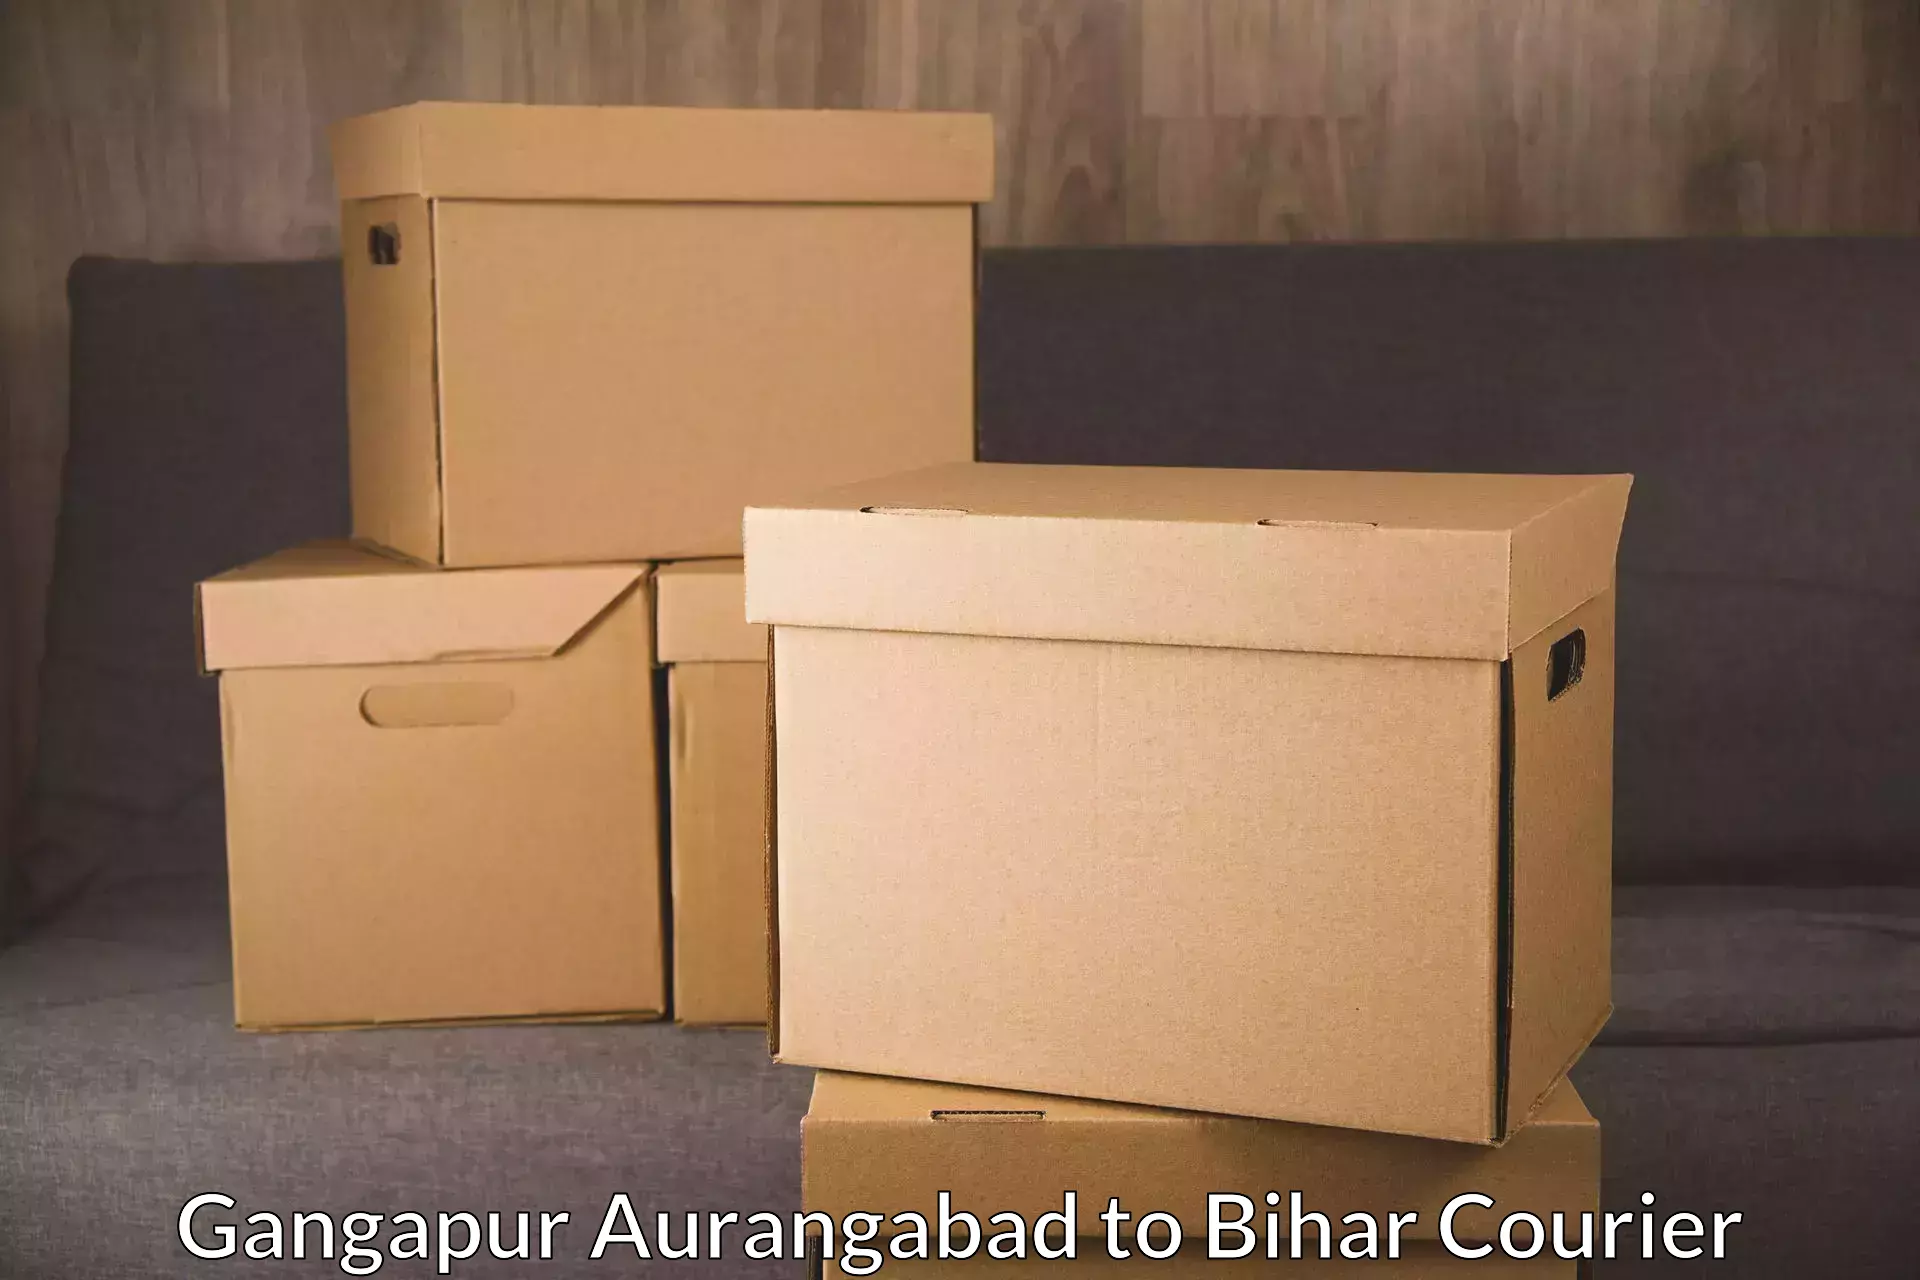 Reliable delivery network Gangapur Aurangabad to Dumraon